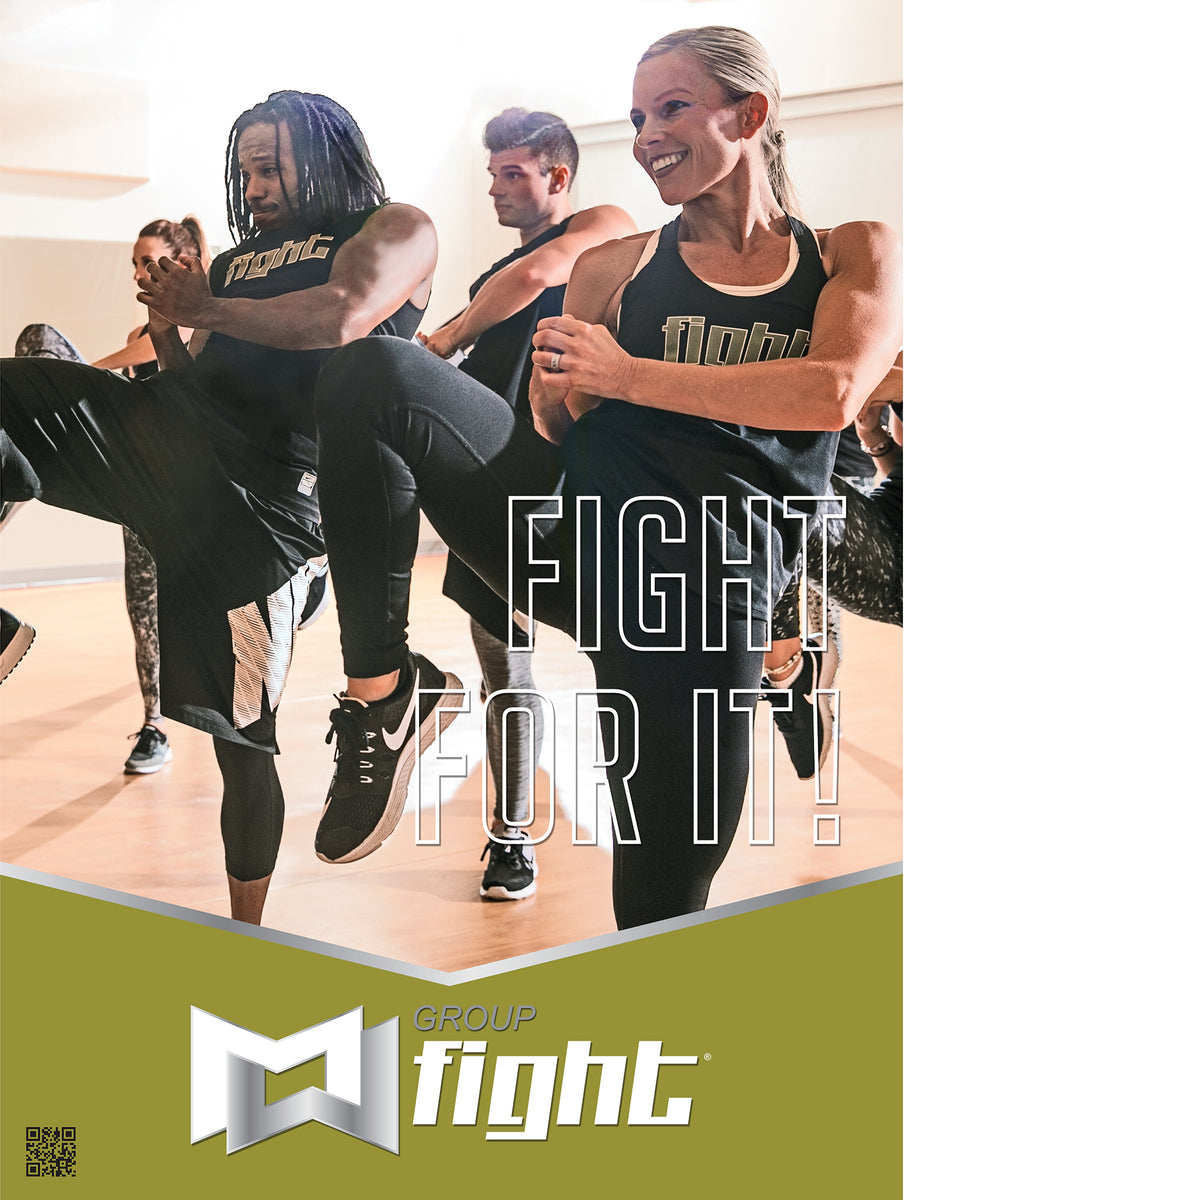 Group Kick Fight OCT9 OCT14 CD DVD MOSSA - スポーツ/フィットネス